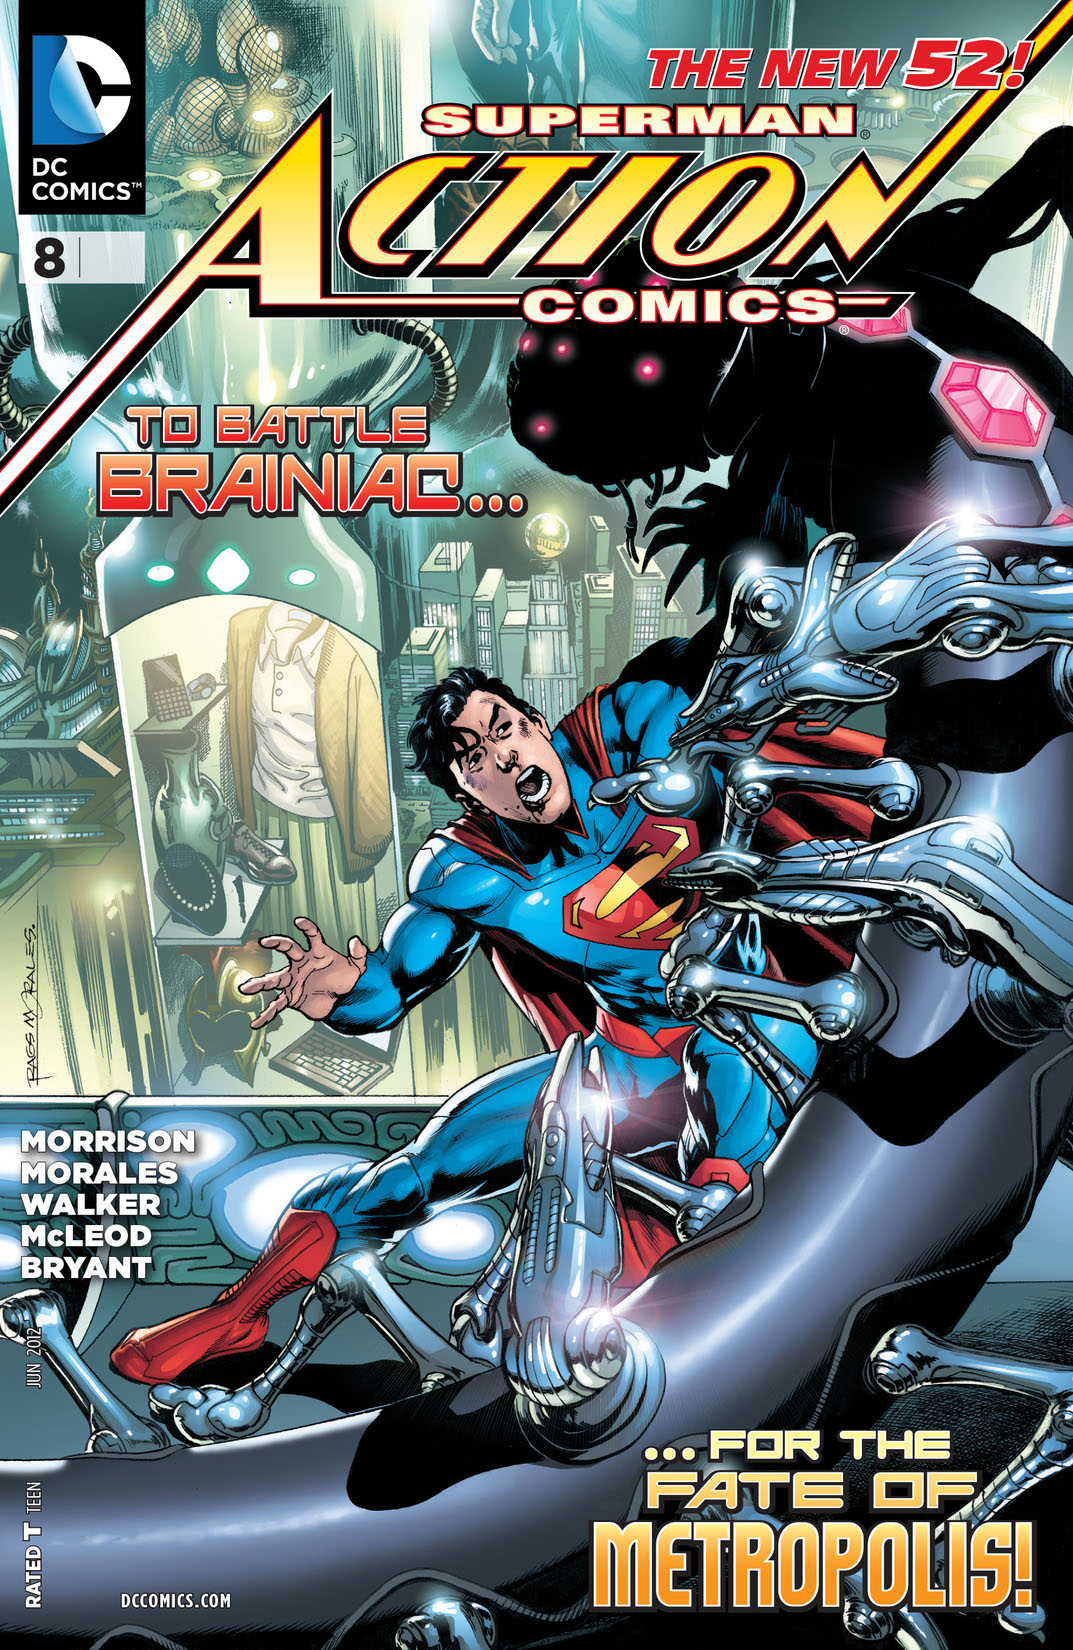 Action Comics (2011-) #8 preview images